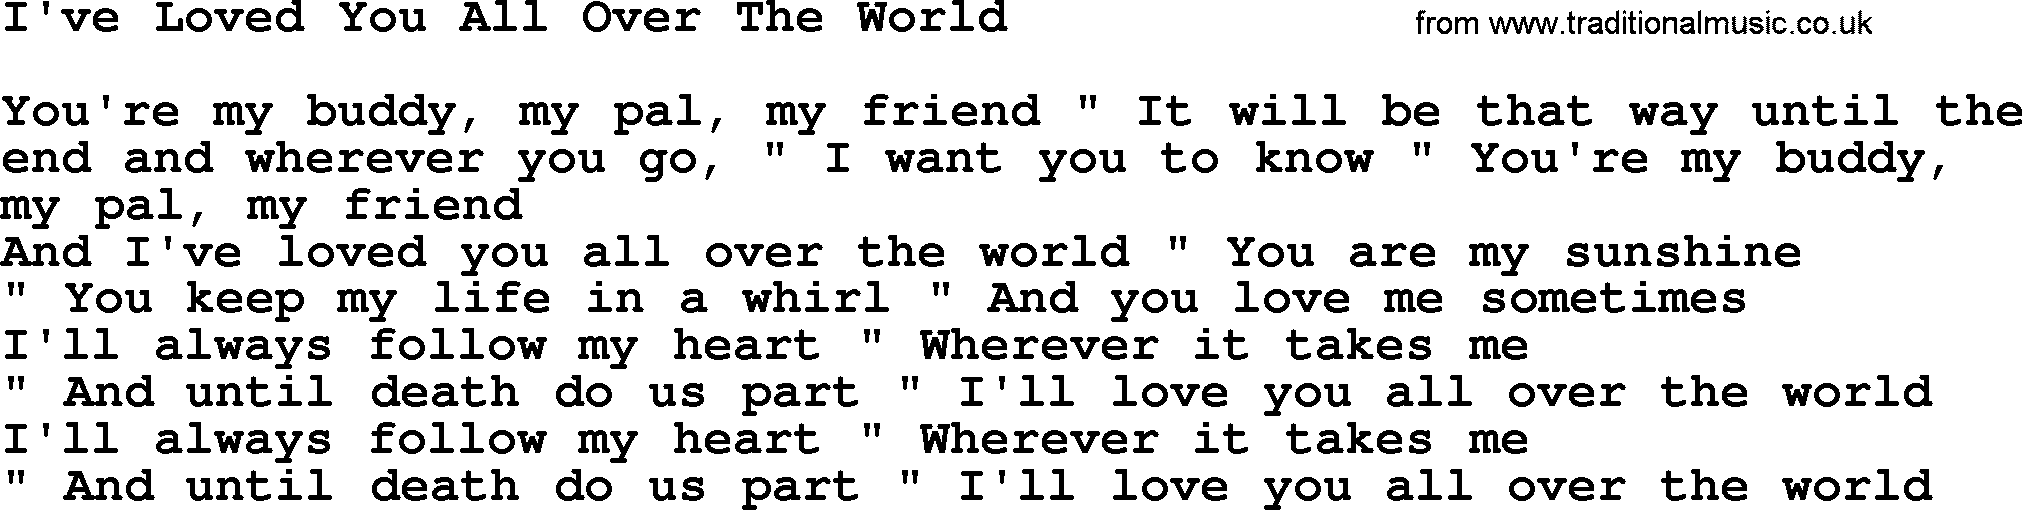 Willie Nelson song: I've Loved You All Over The World lyrics